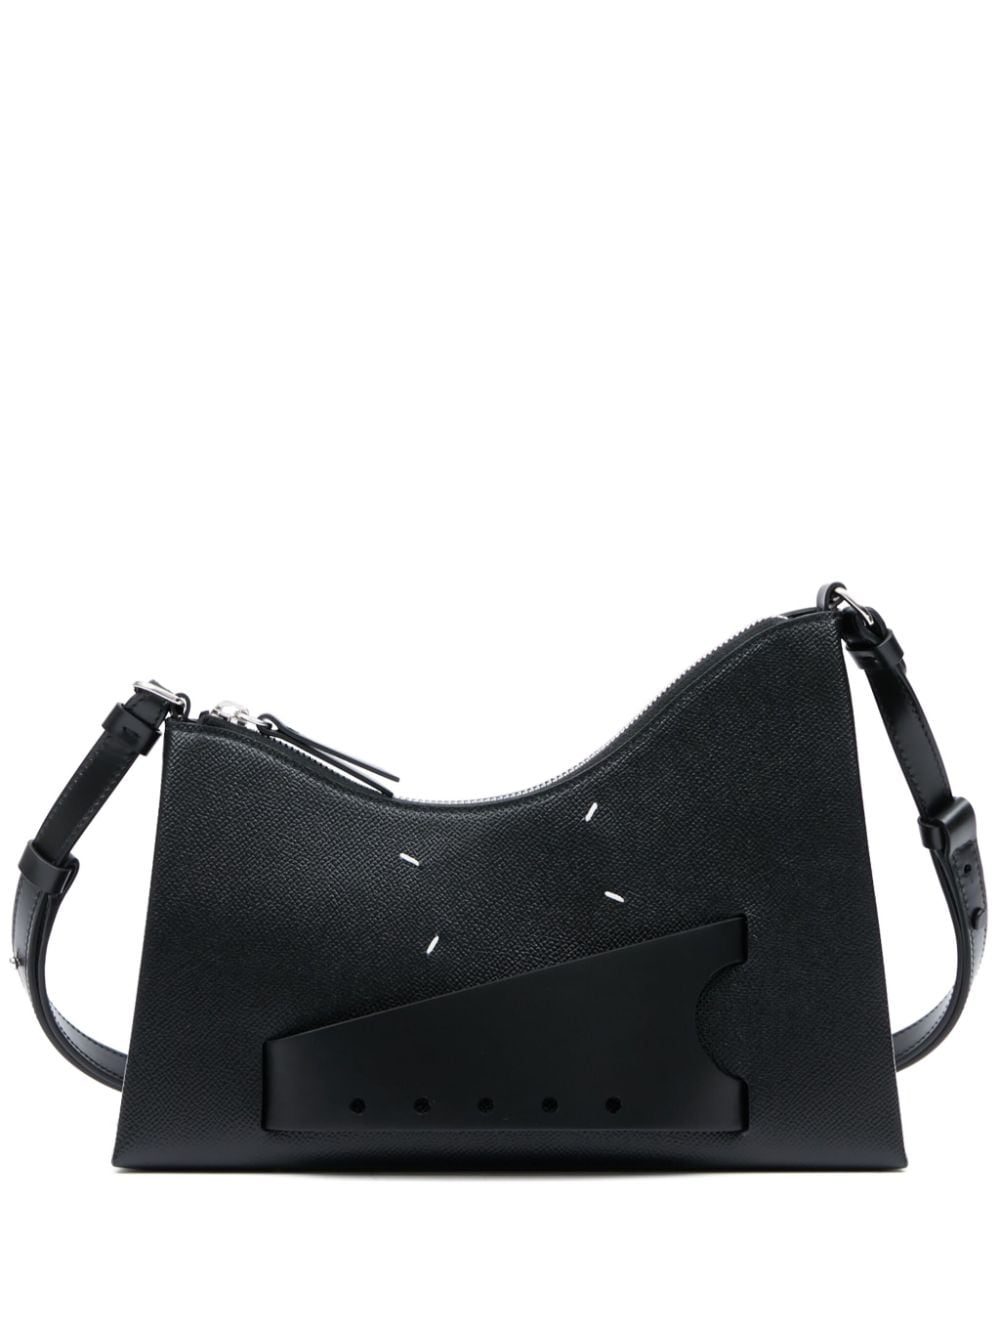 Image 1 of Maison Margiela small Snatched leather shoulder bag